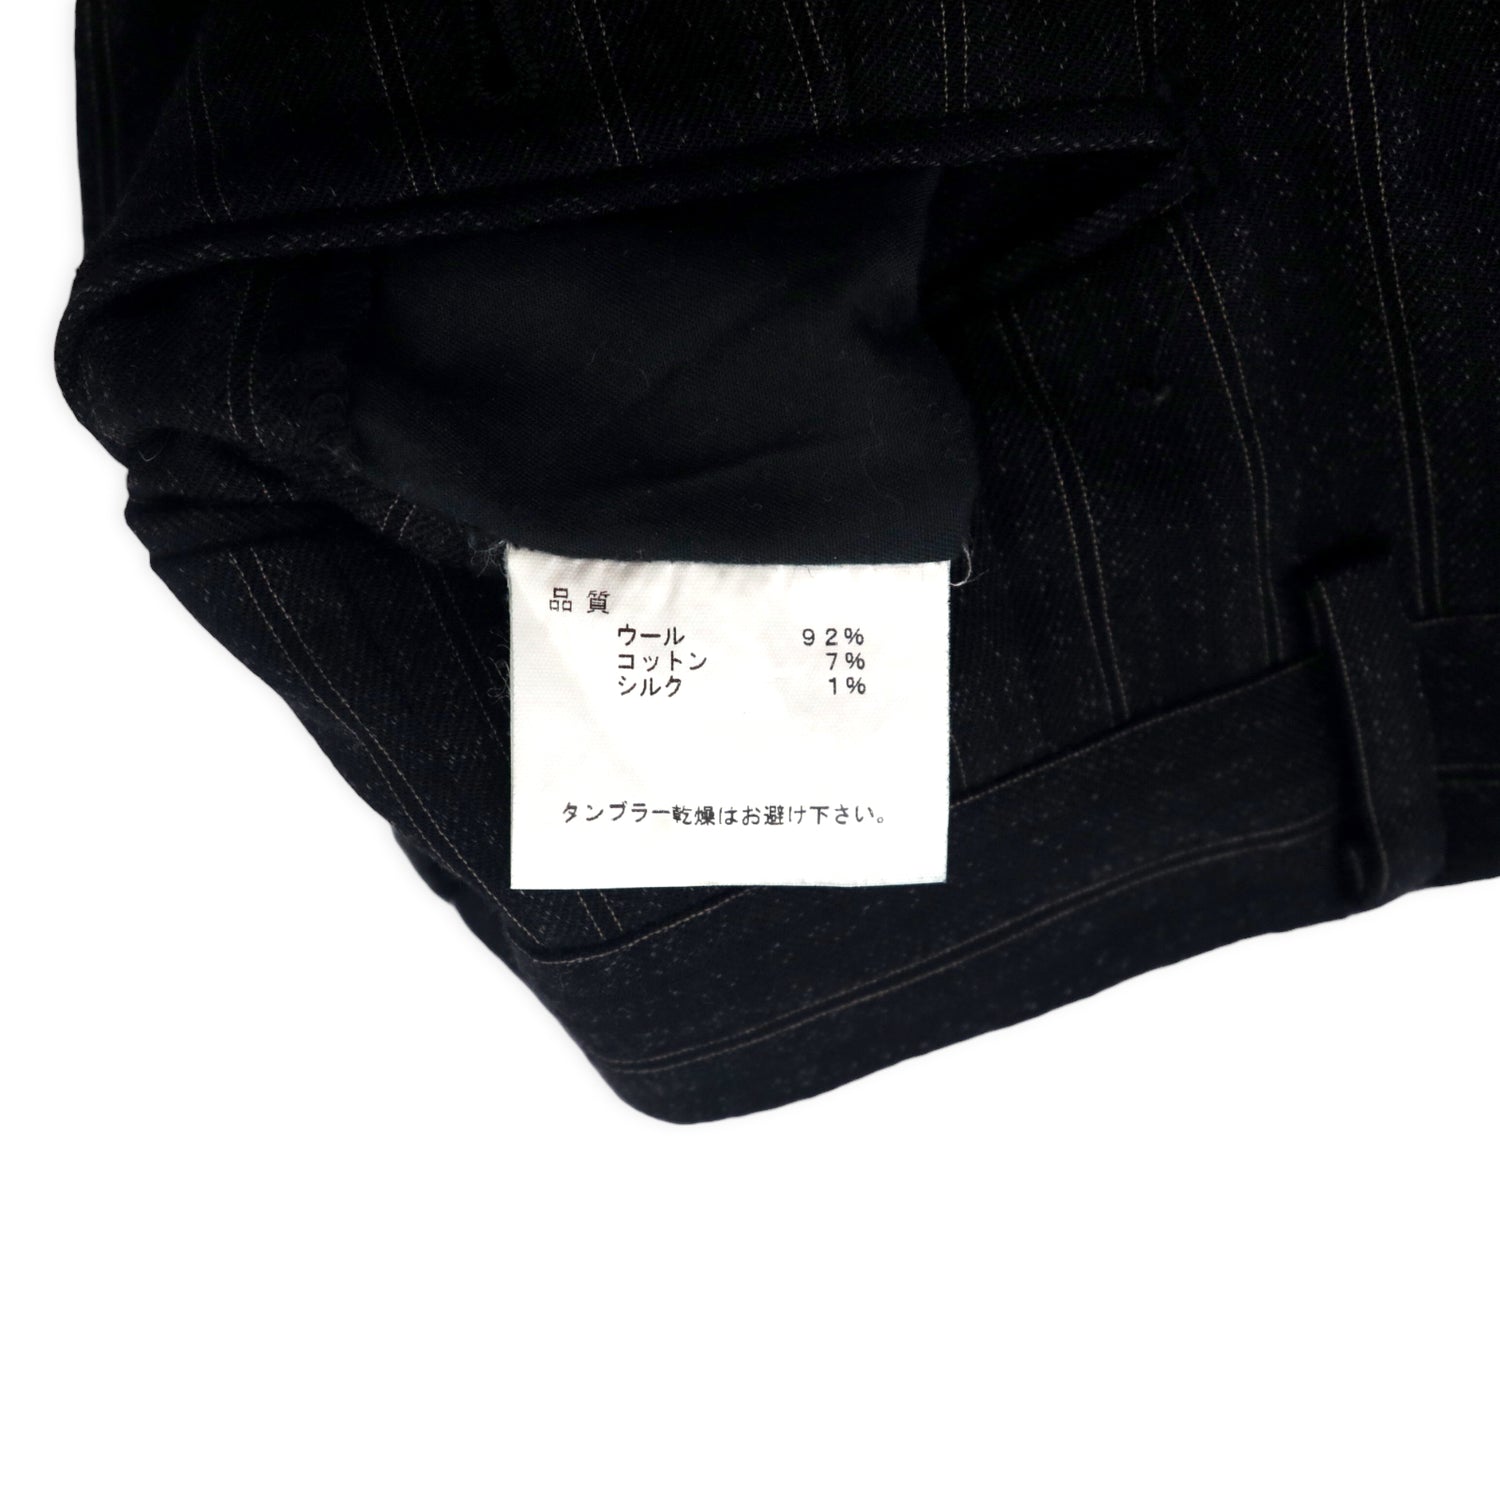 PAUL SMITH SLACKS PANTS 82 Black Striped Wool Silk Mixed Japan